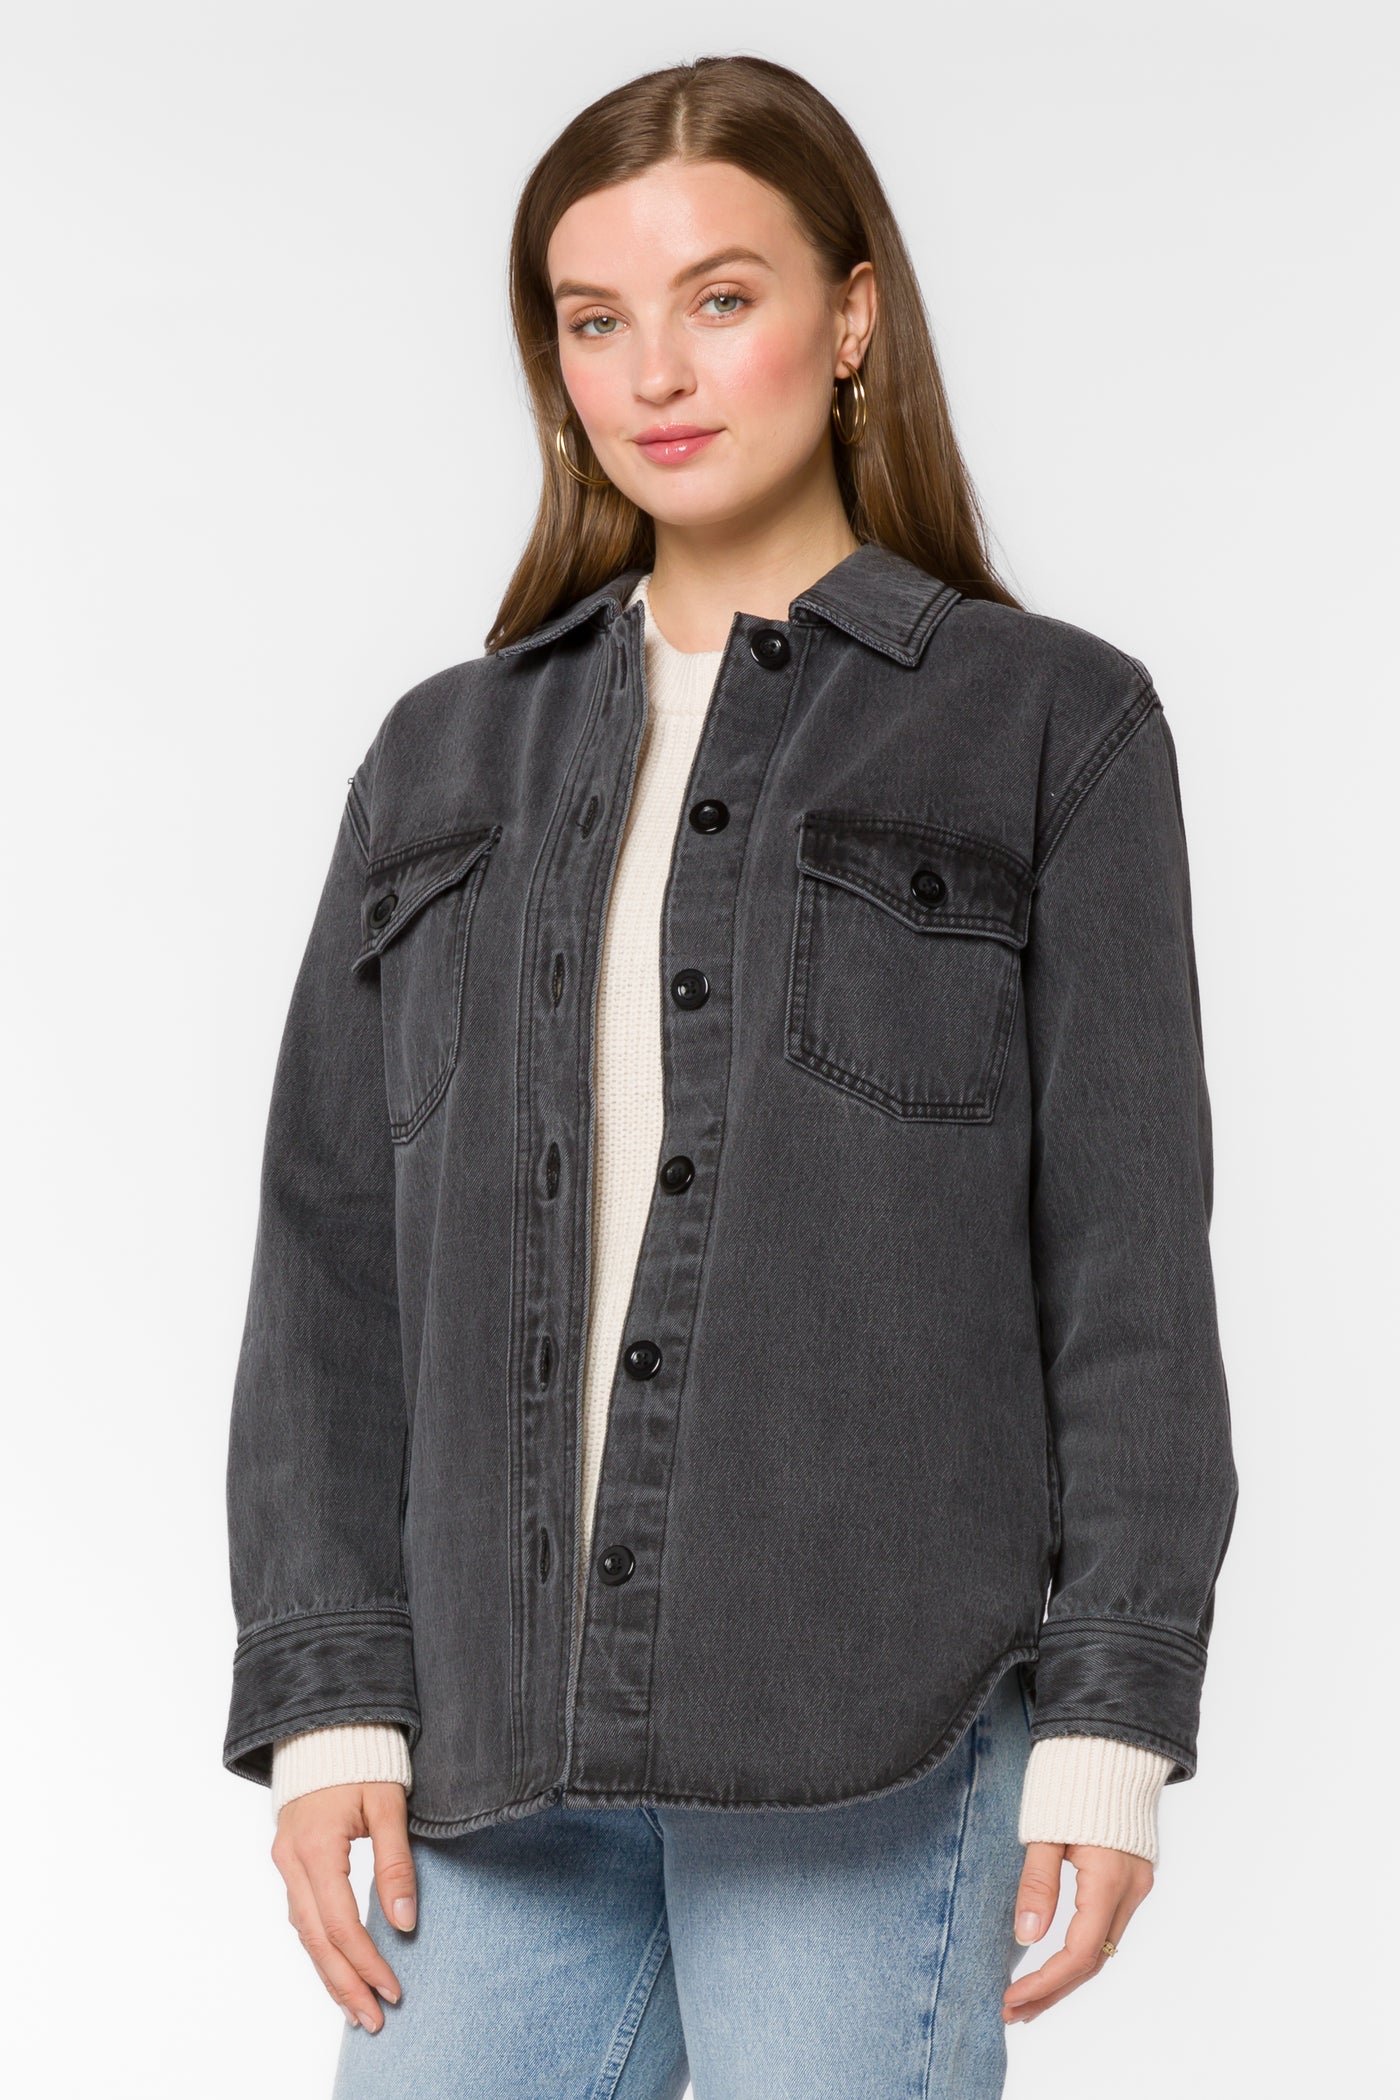 Eleanor Grey Jacket - Jackets & Outerwear - Velvet Heart Clothing